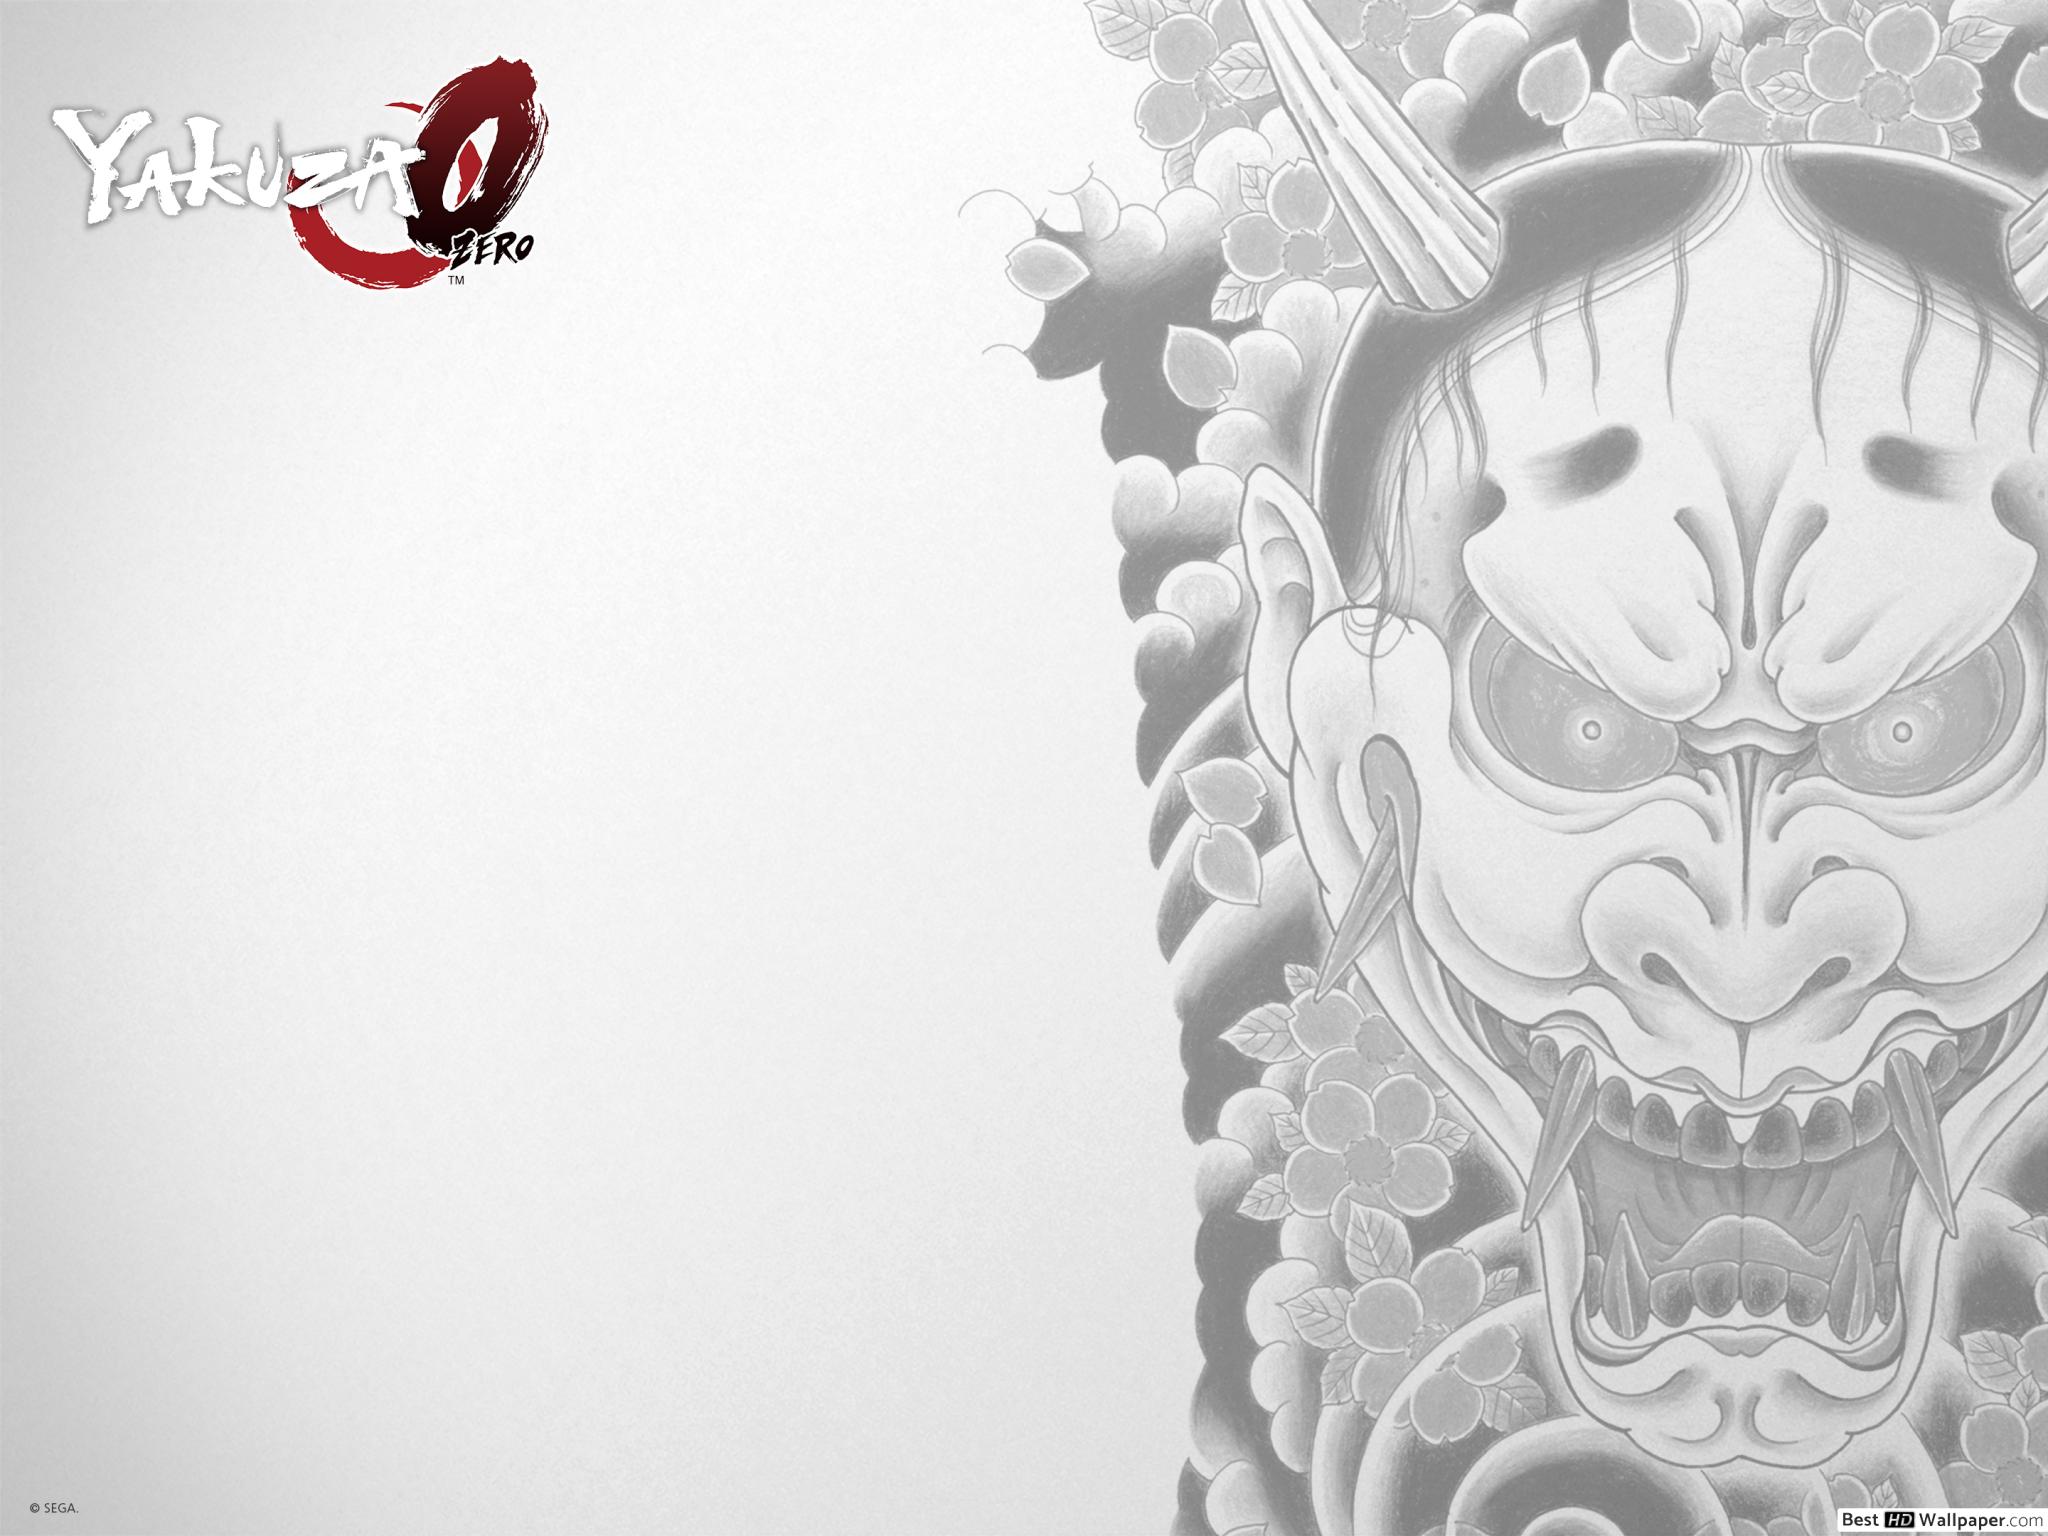 Yakuza 0 tattoo HD wallpaper download